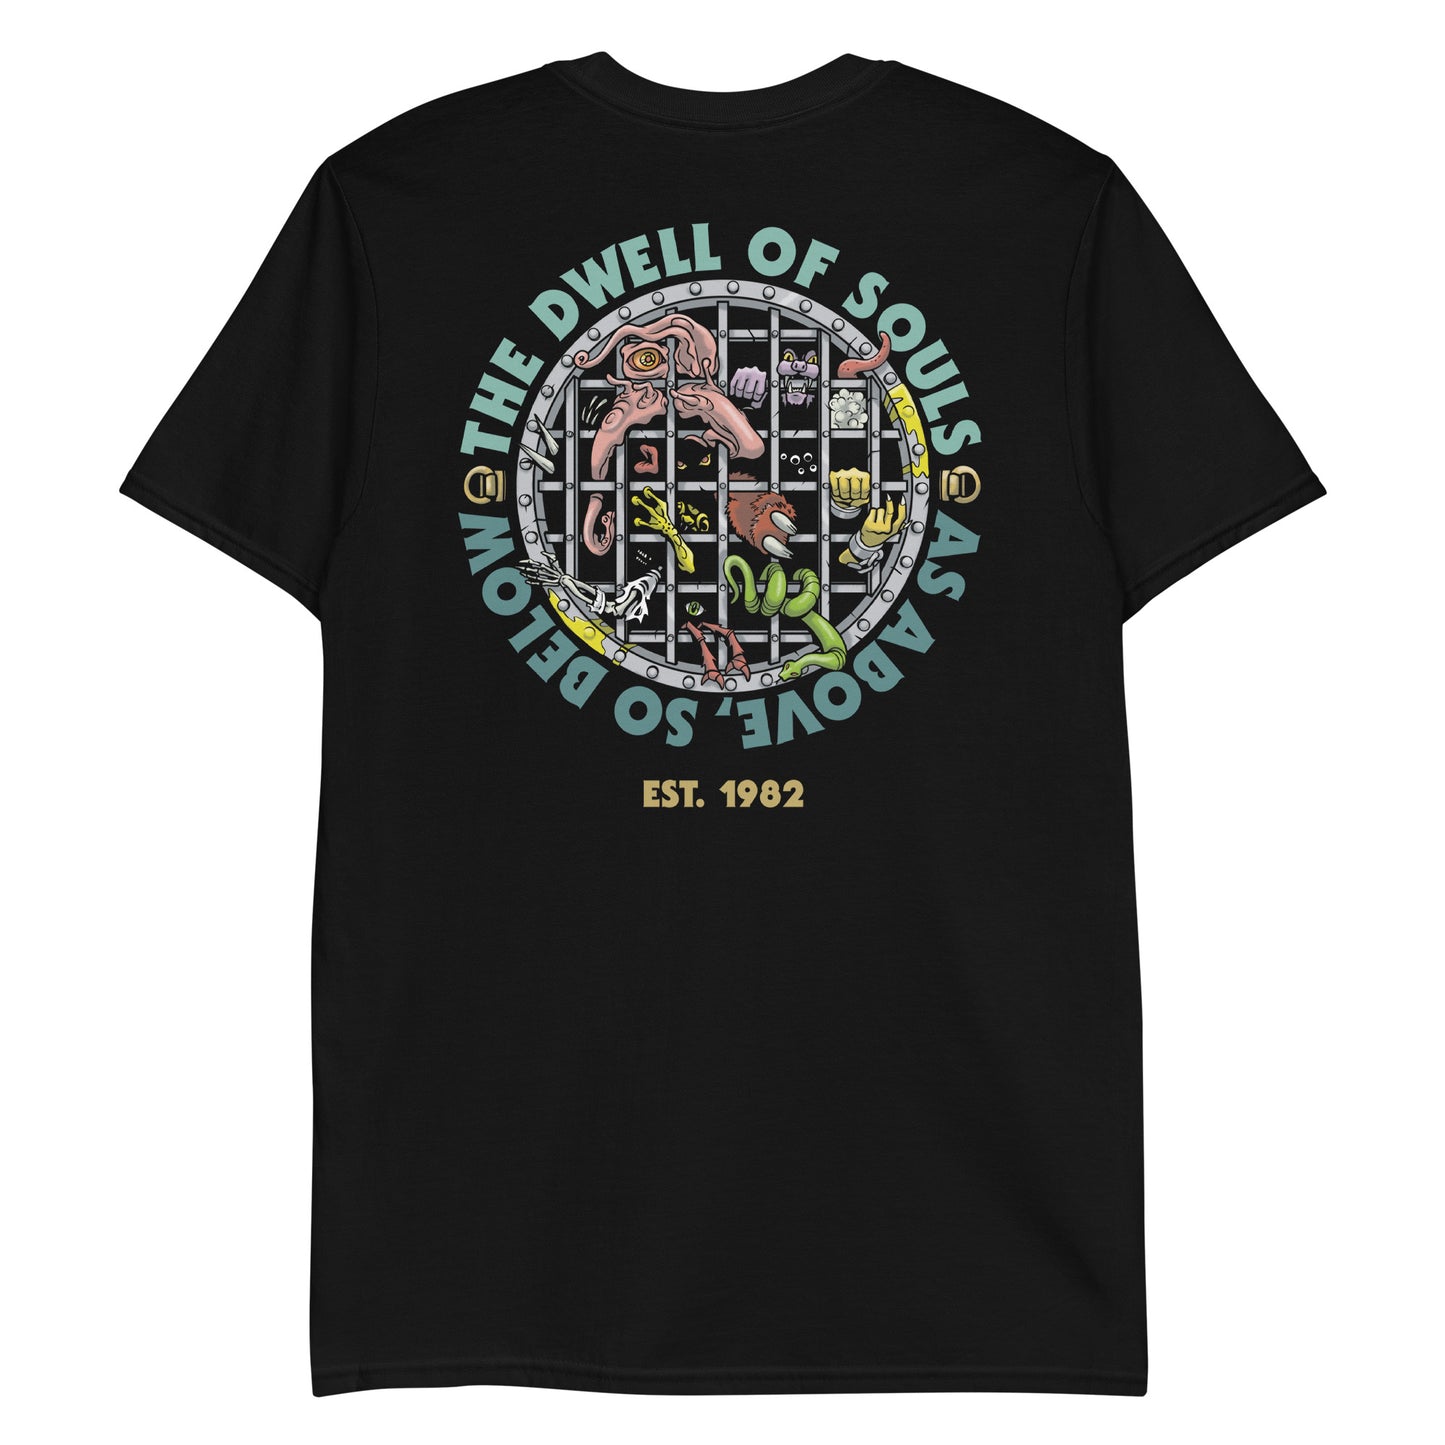 The Dwell of Souls t-shirt